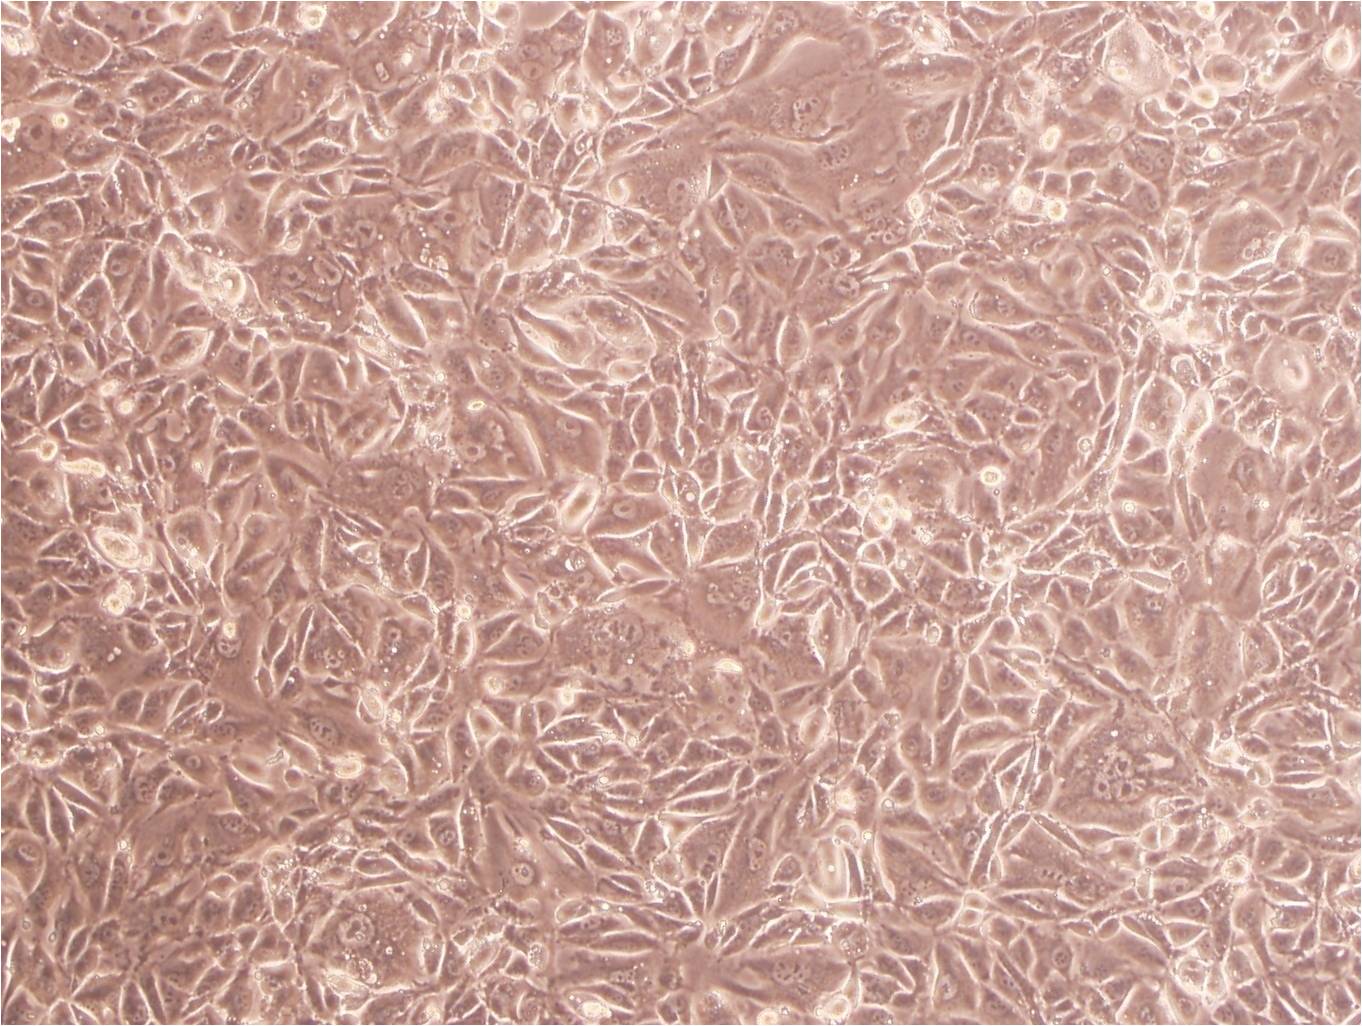 COLO 16 Cell|人皮肤鳞癌细胞,COLO 16 Cell